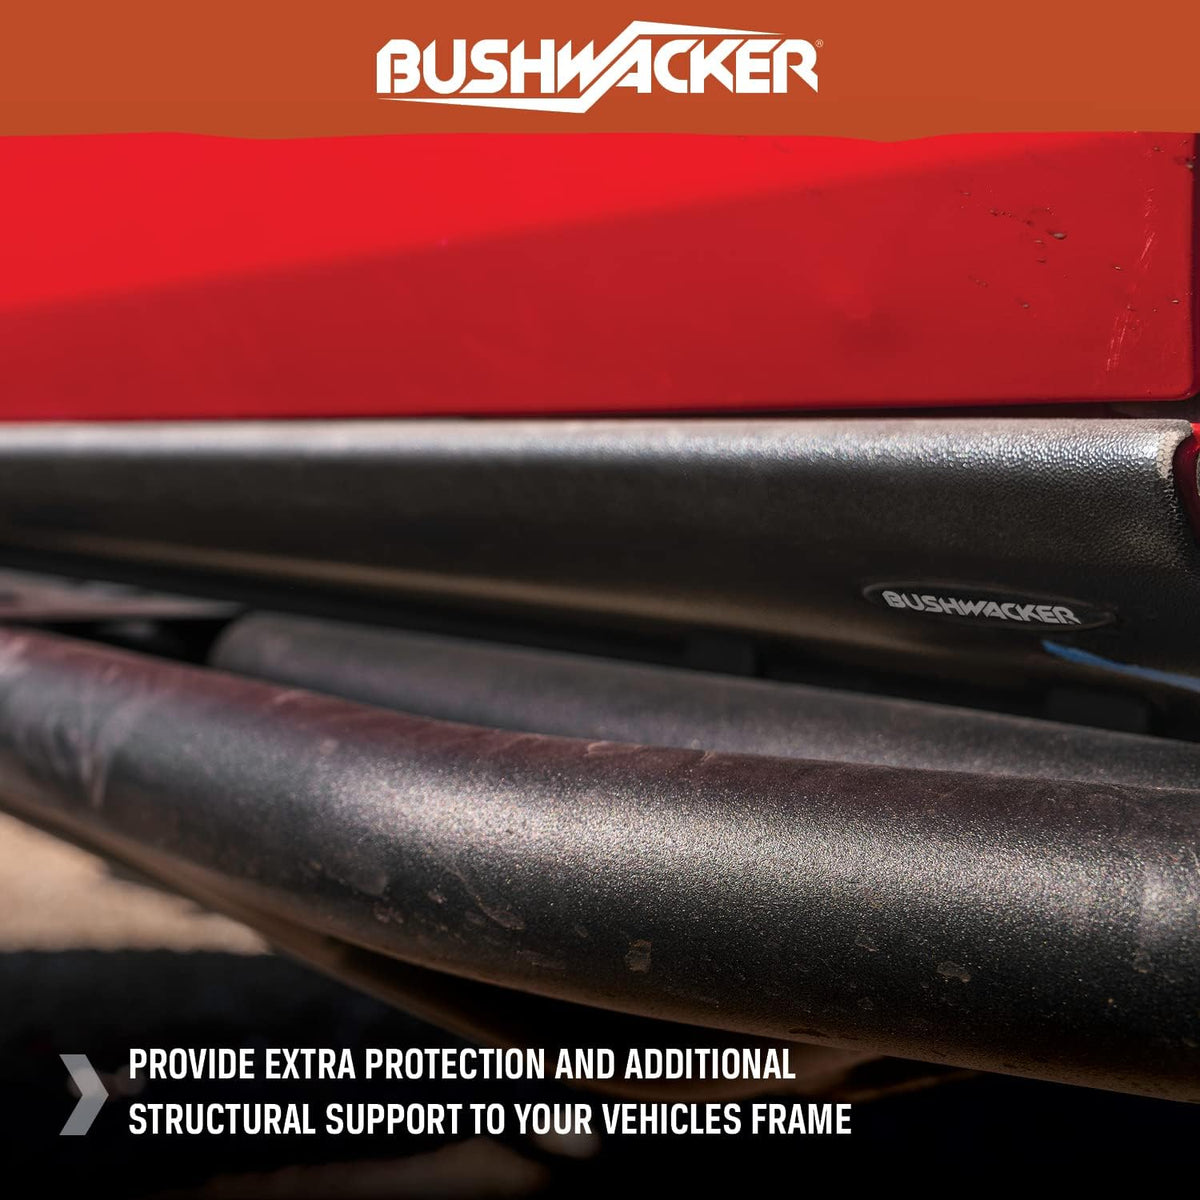 Bushwacker Trail Armor Side Rocker | 4-Piece Set, Black, Textured Finish | 14065 | Fits 2014-2018 Chevrolet/GMC Silverado/Sierra 1500 with Crew Cab